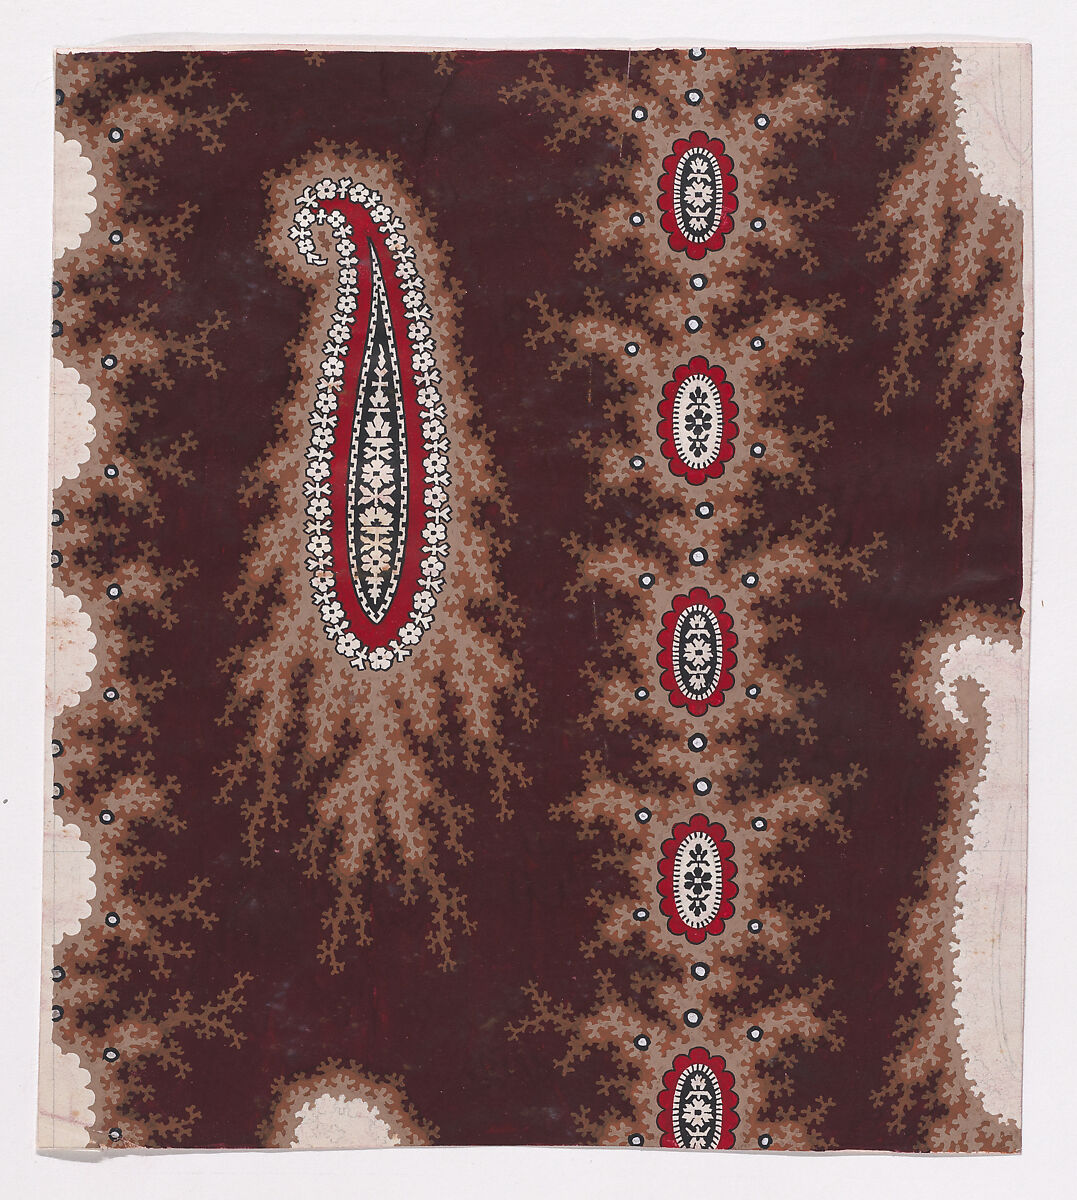 Designs for Printed Cotton Textiles, Anonymous, Alsatian, 19th century, Gouache 